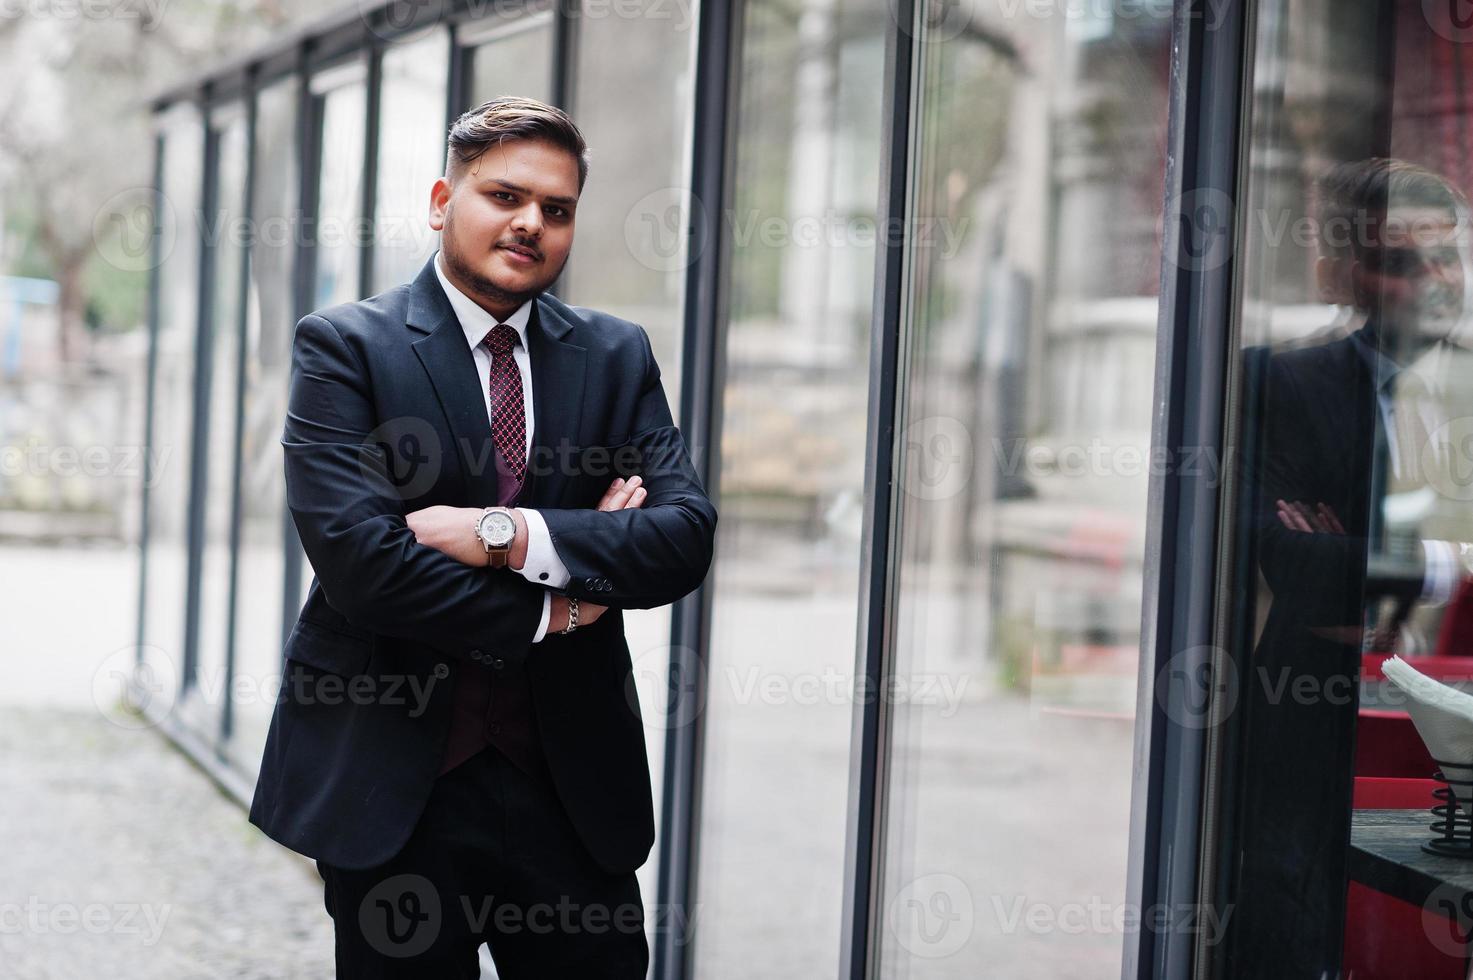 stijlvolle Indiase zakenman in formele kleding die tegen ramen staat in het zakencentrum. foto